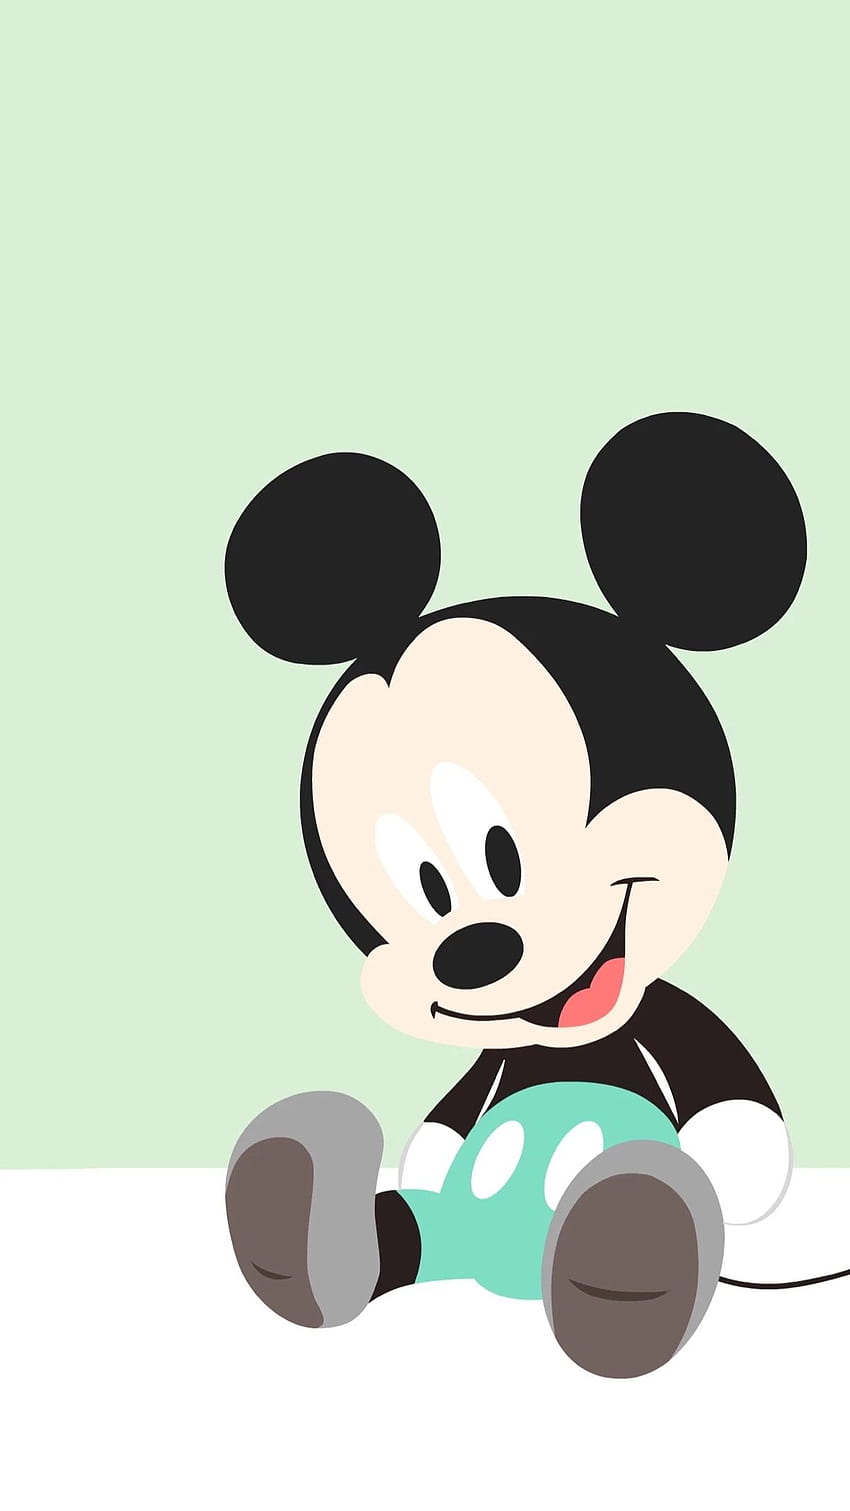 Wallpaper lucu dan cantik bertema mickey mouse